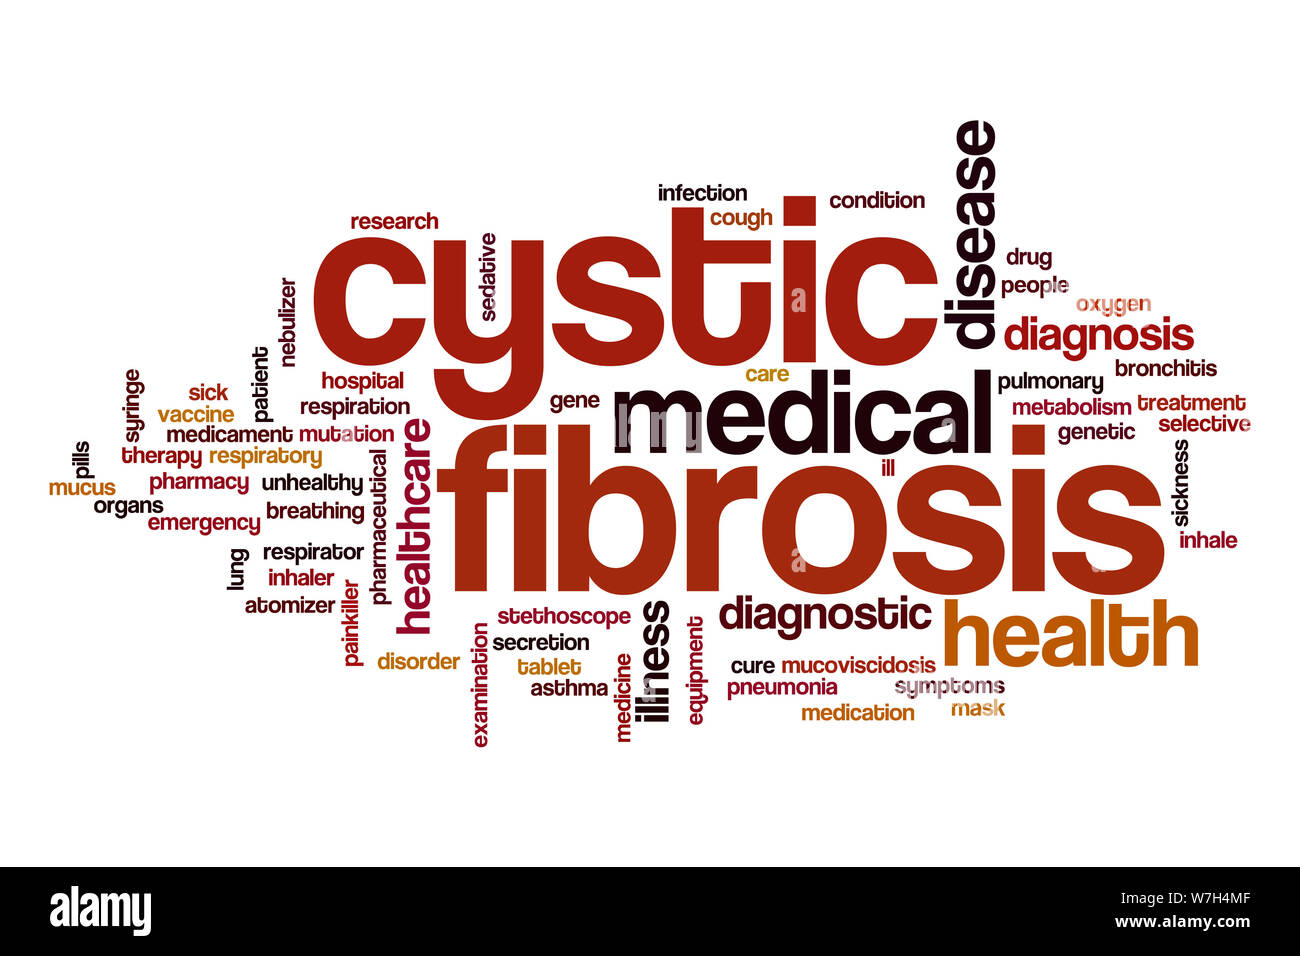 Cystic fibrosis word cloud Stock Photo